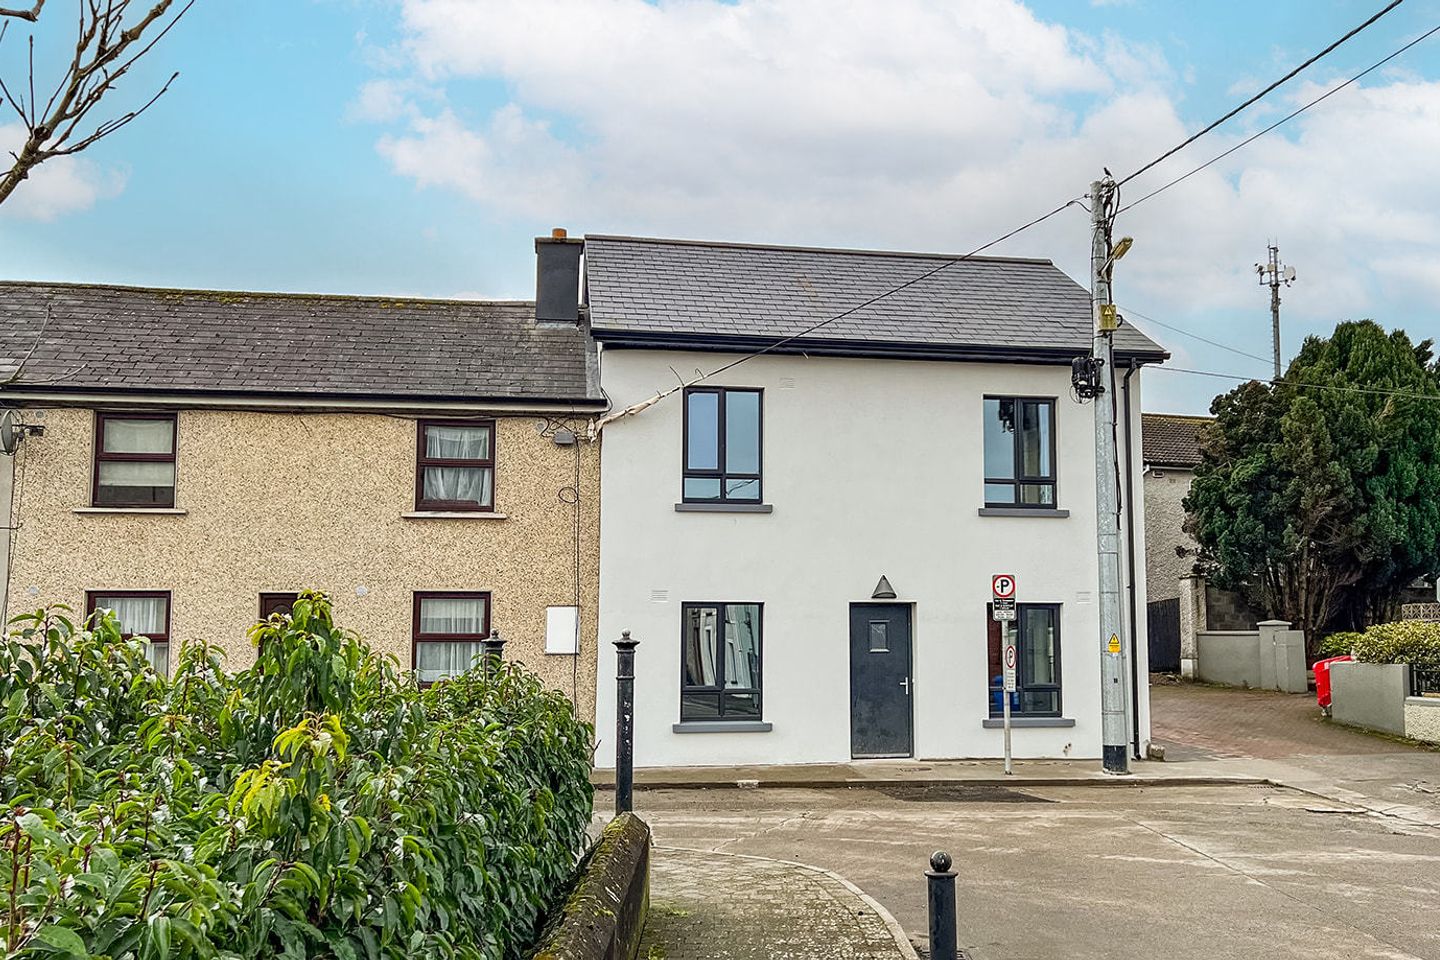 Bell View Apartments, James' Green, Kilkenny, Co. Kilkenny, R95N1KX